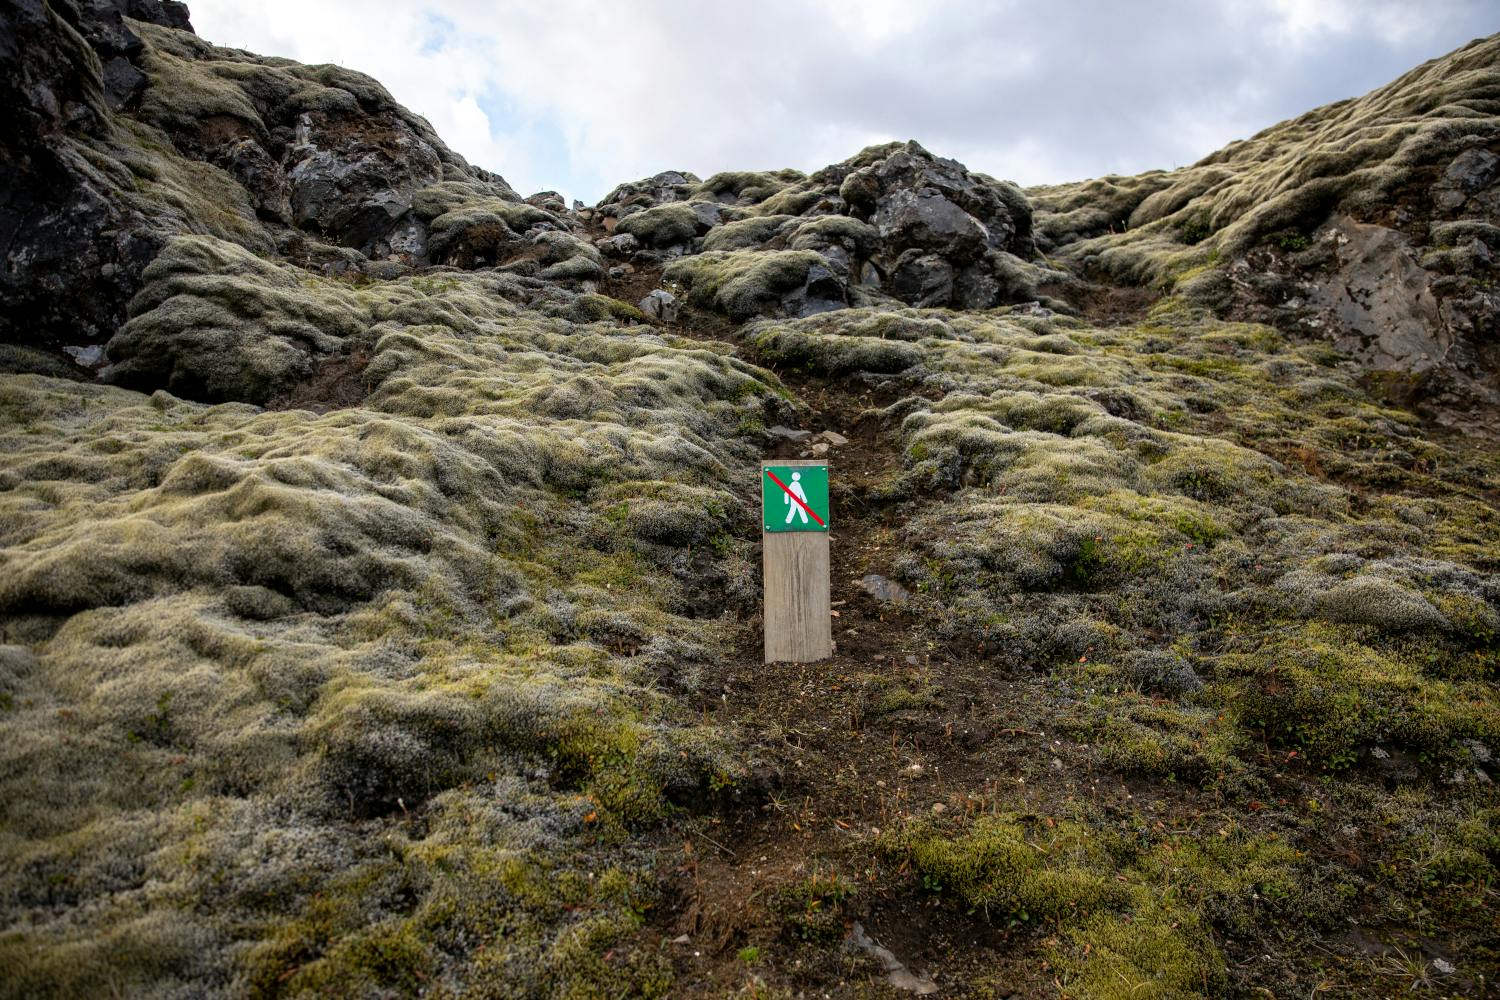 Closed path in a mossy lava field